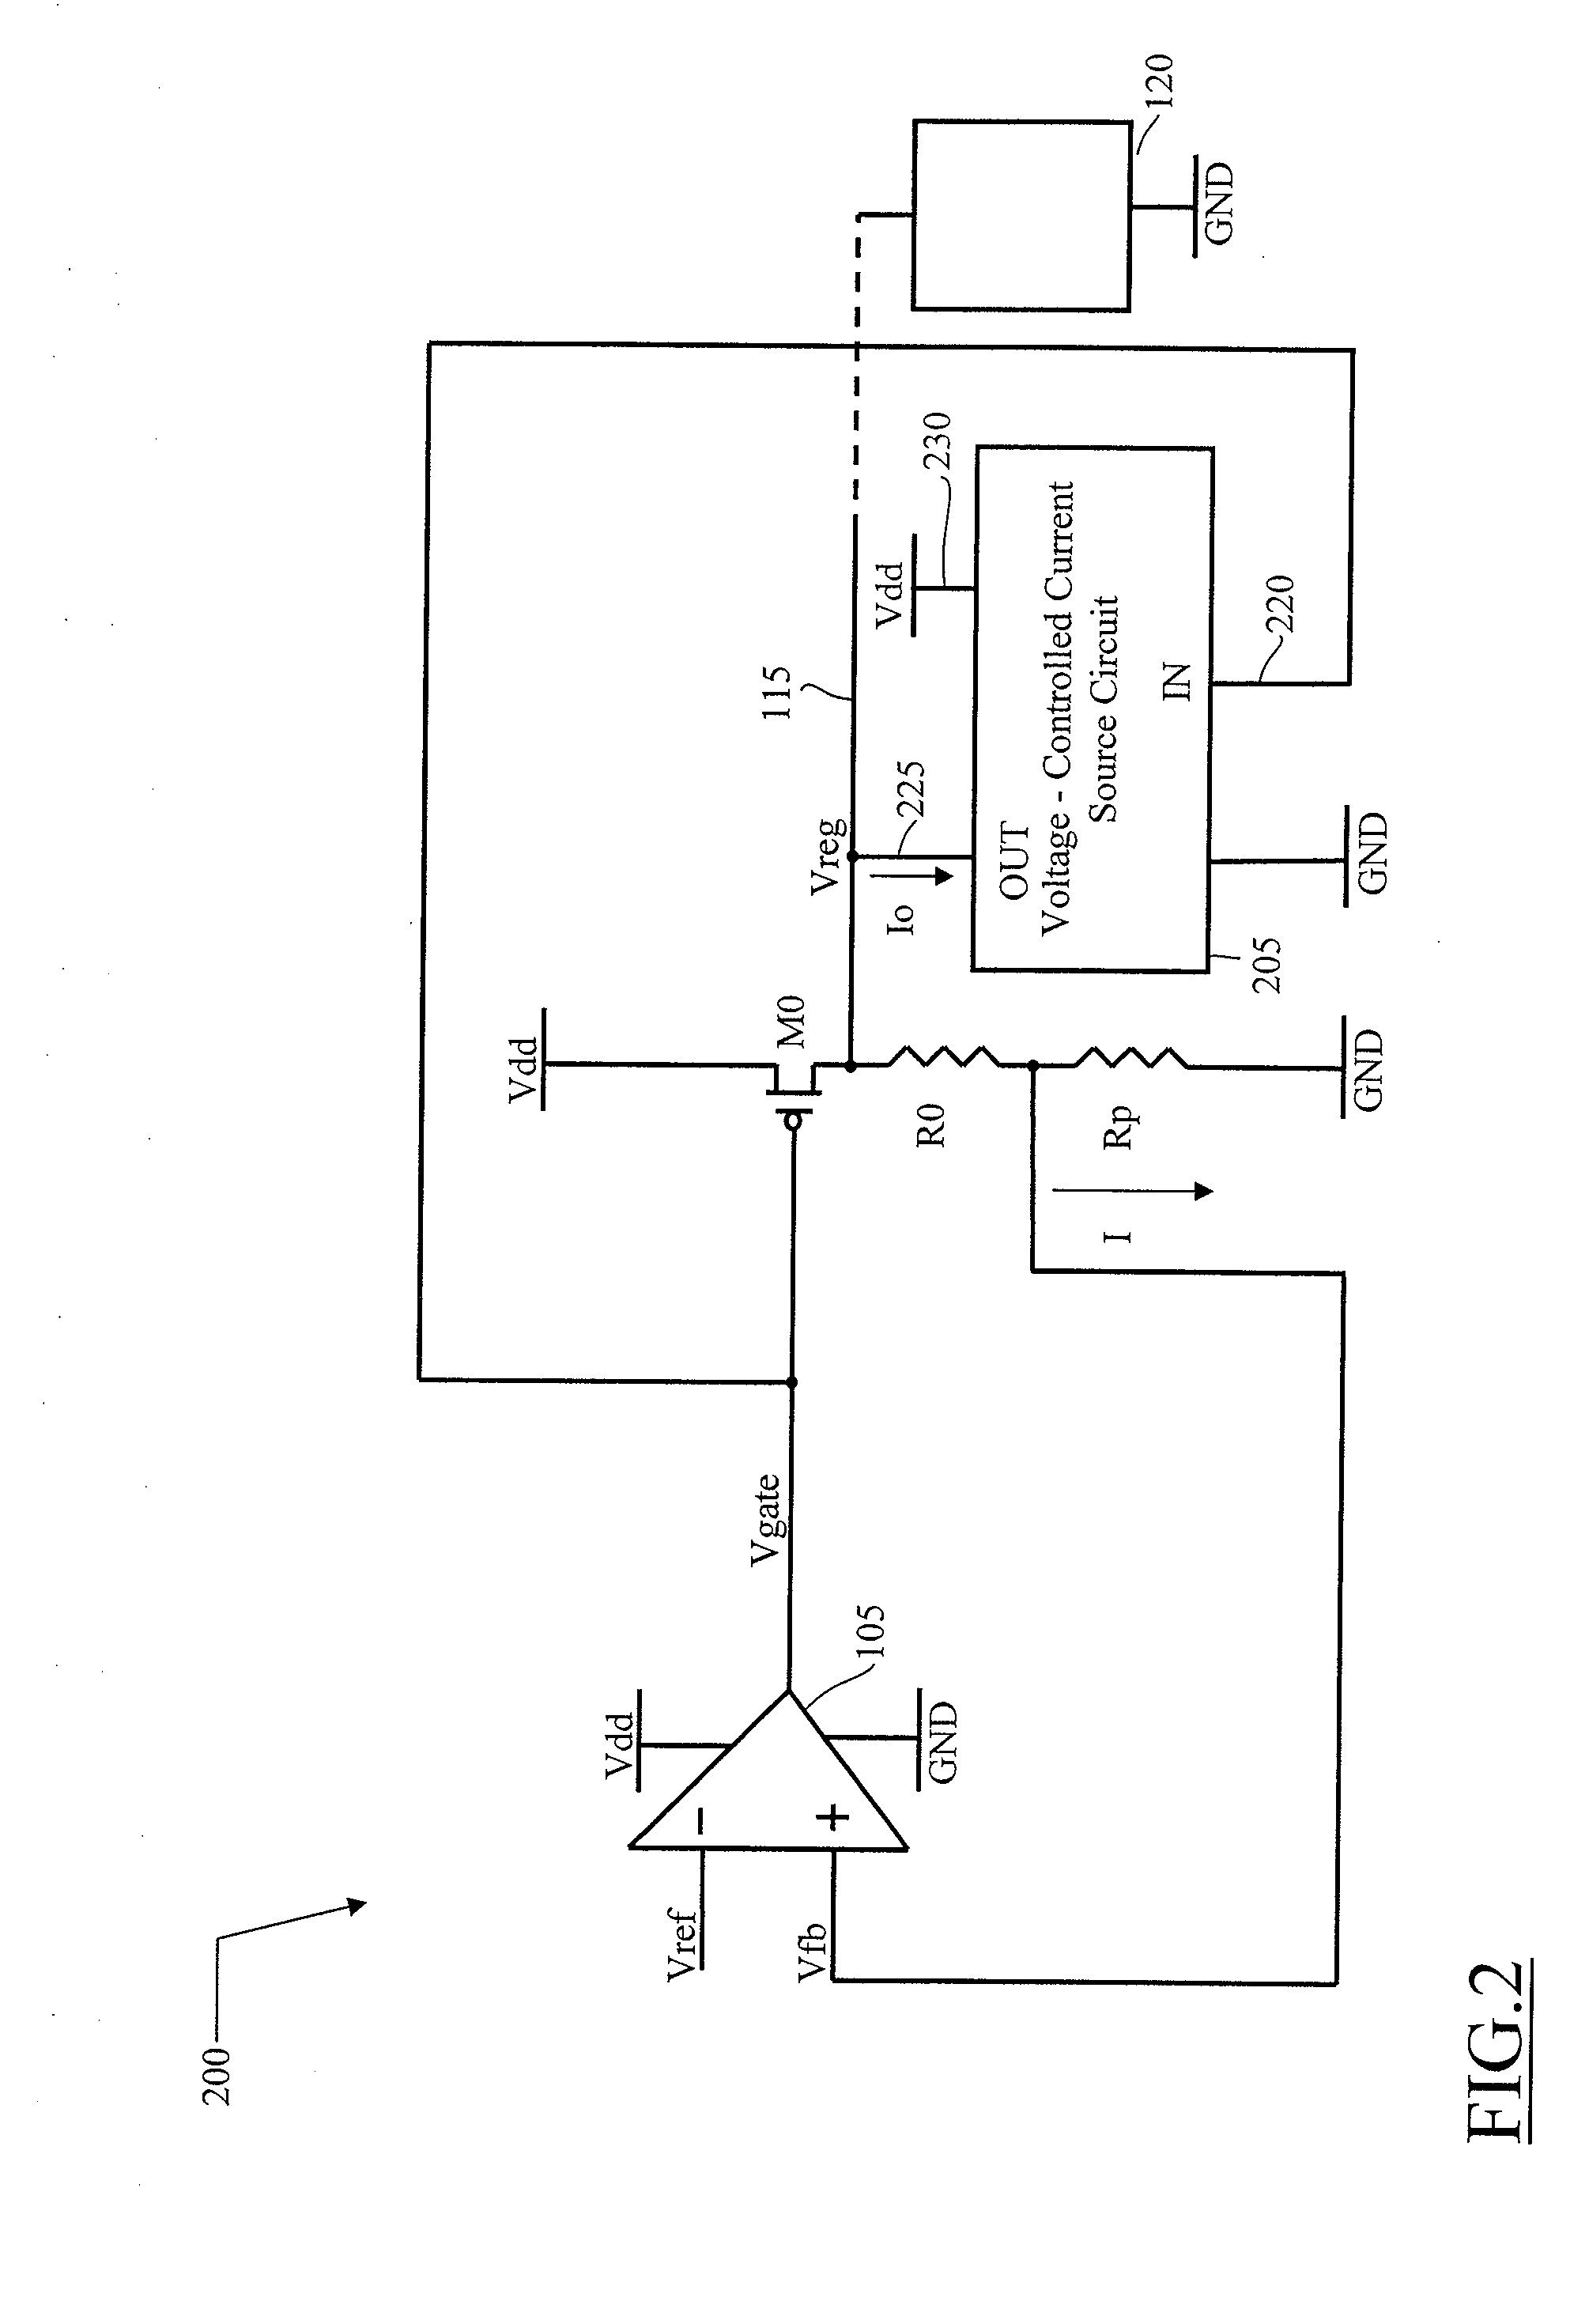 Voltage regulator with leakage current compensation